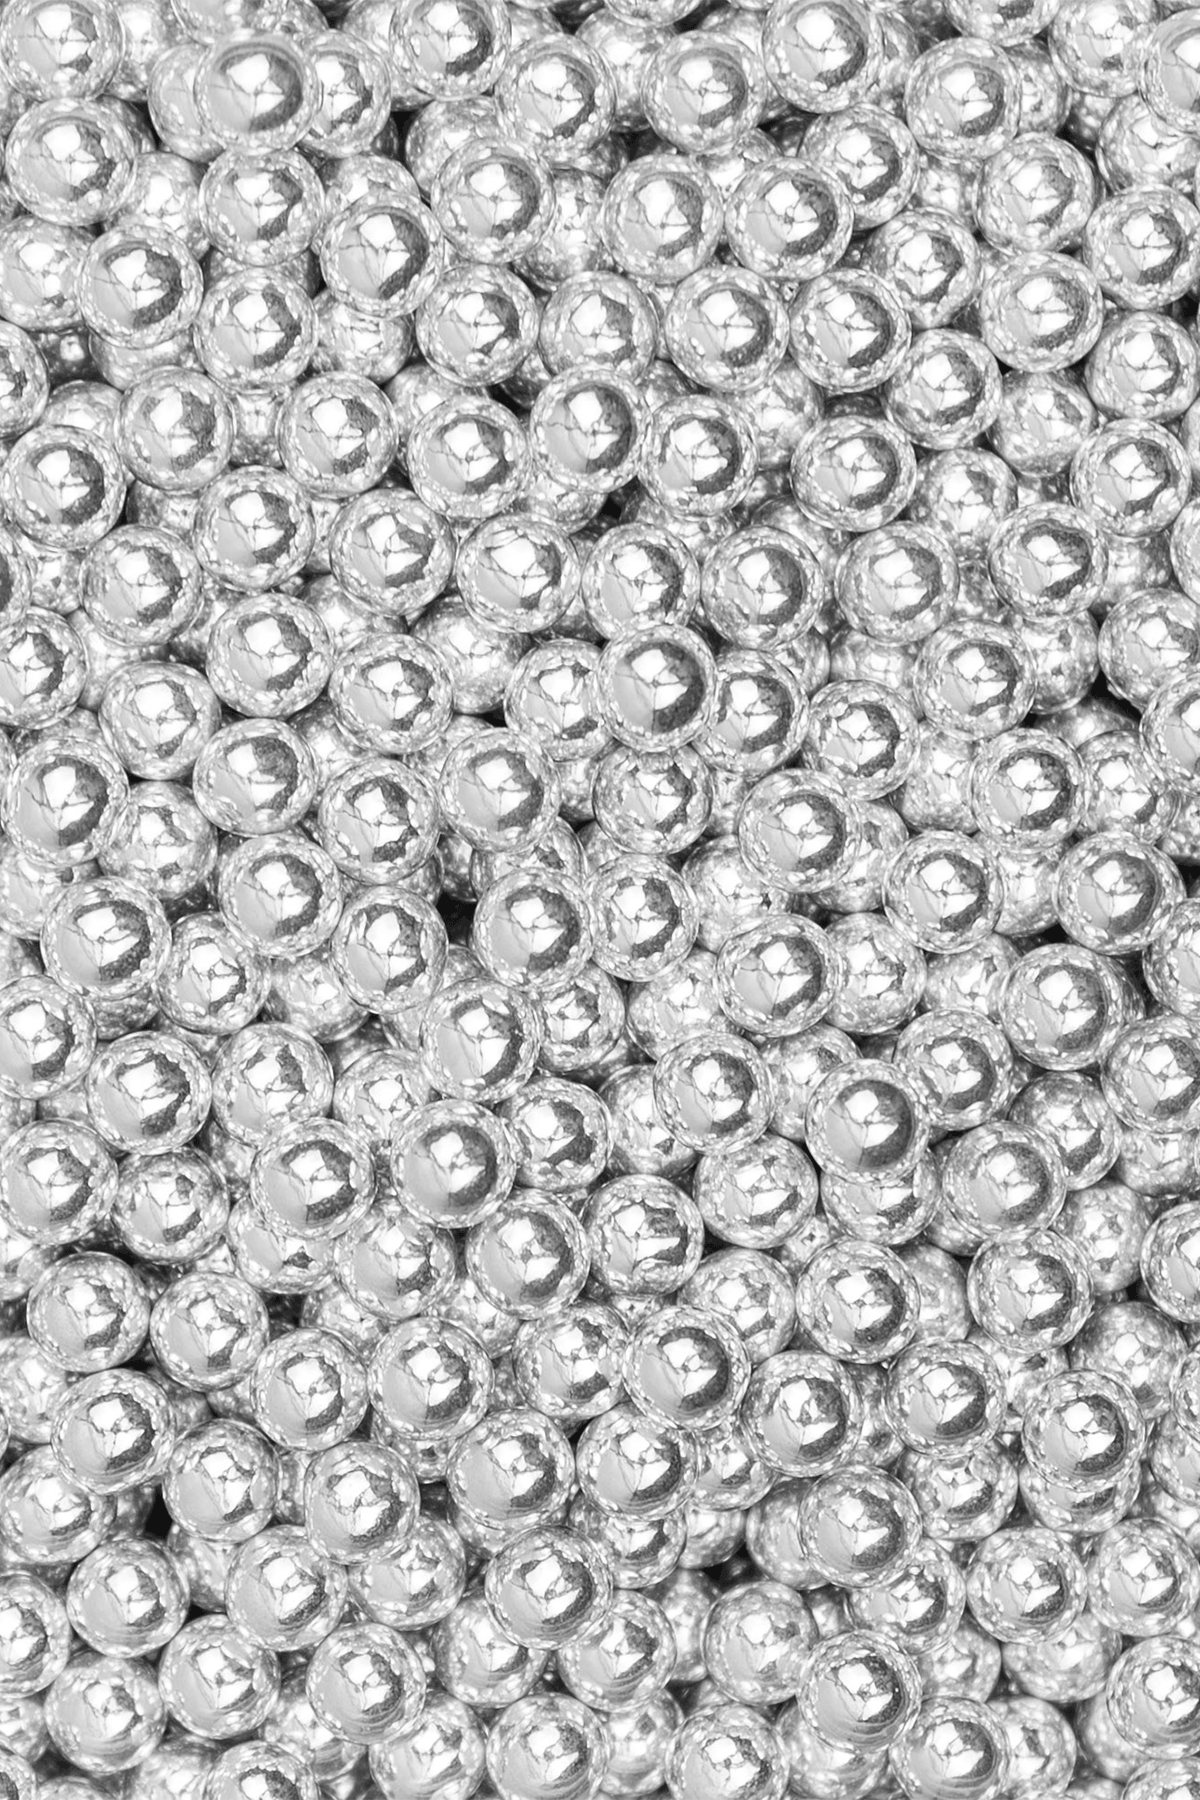 Chocolate Balls - Silver - (Large/10mm) Sprinkles Sprinkly